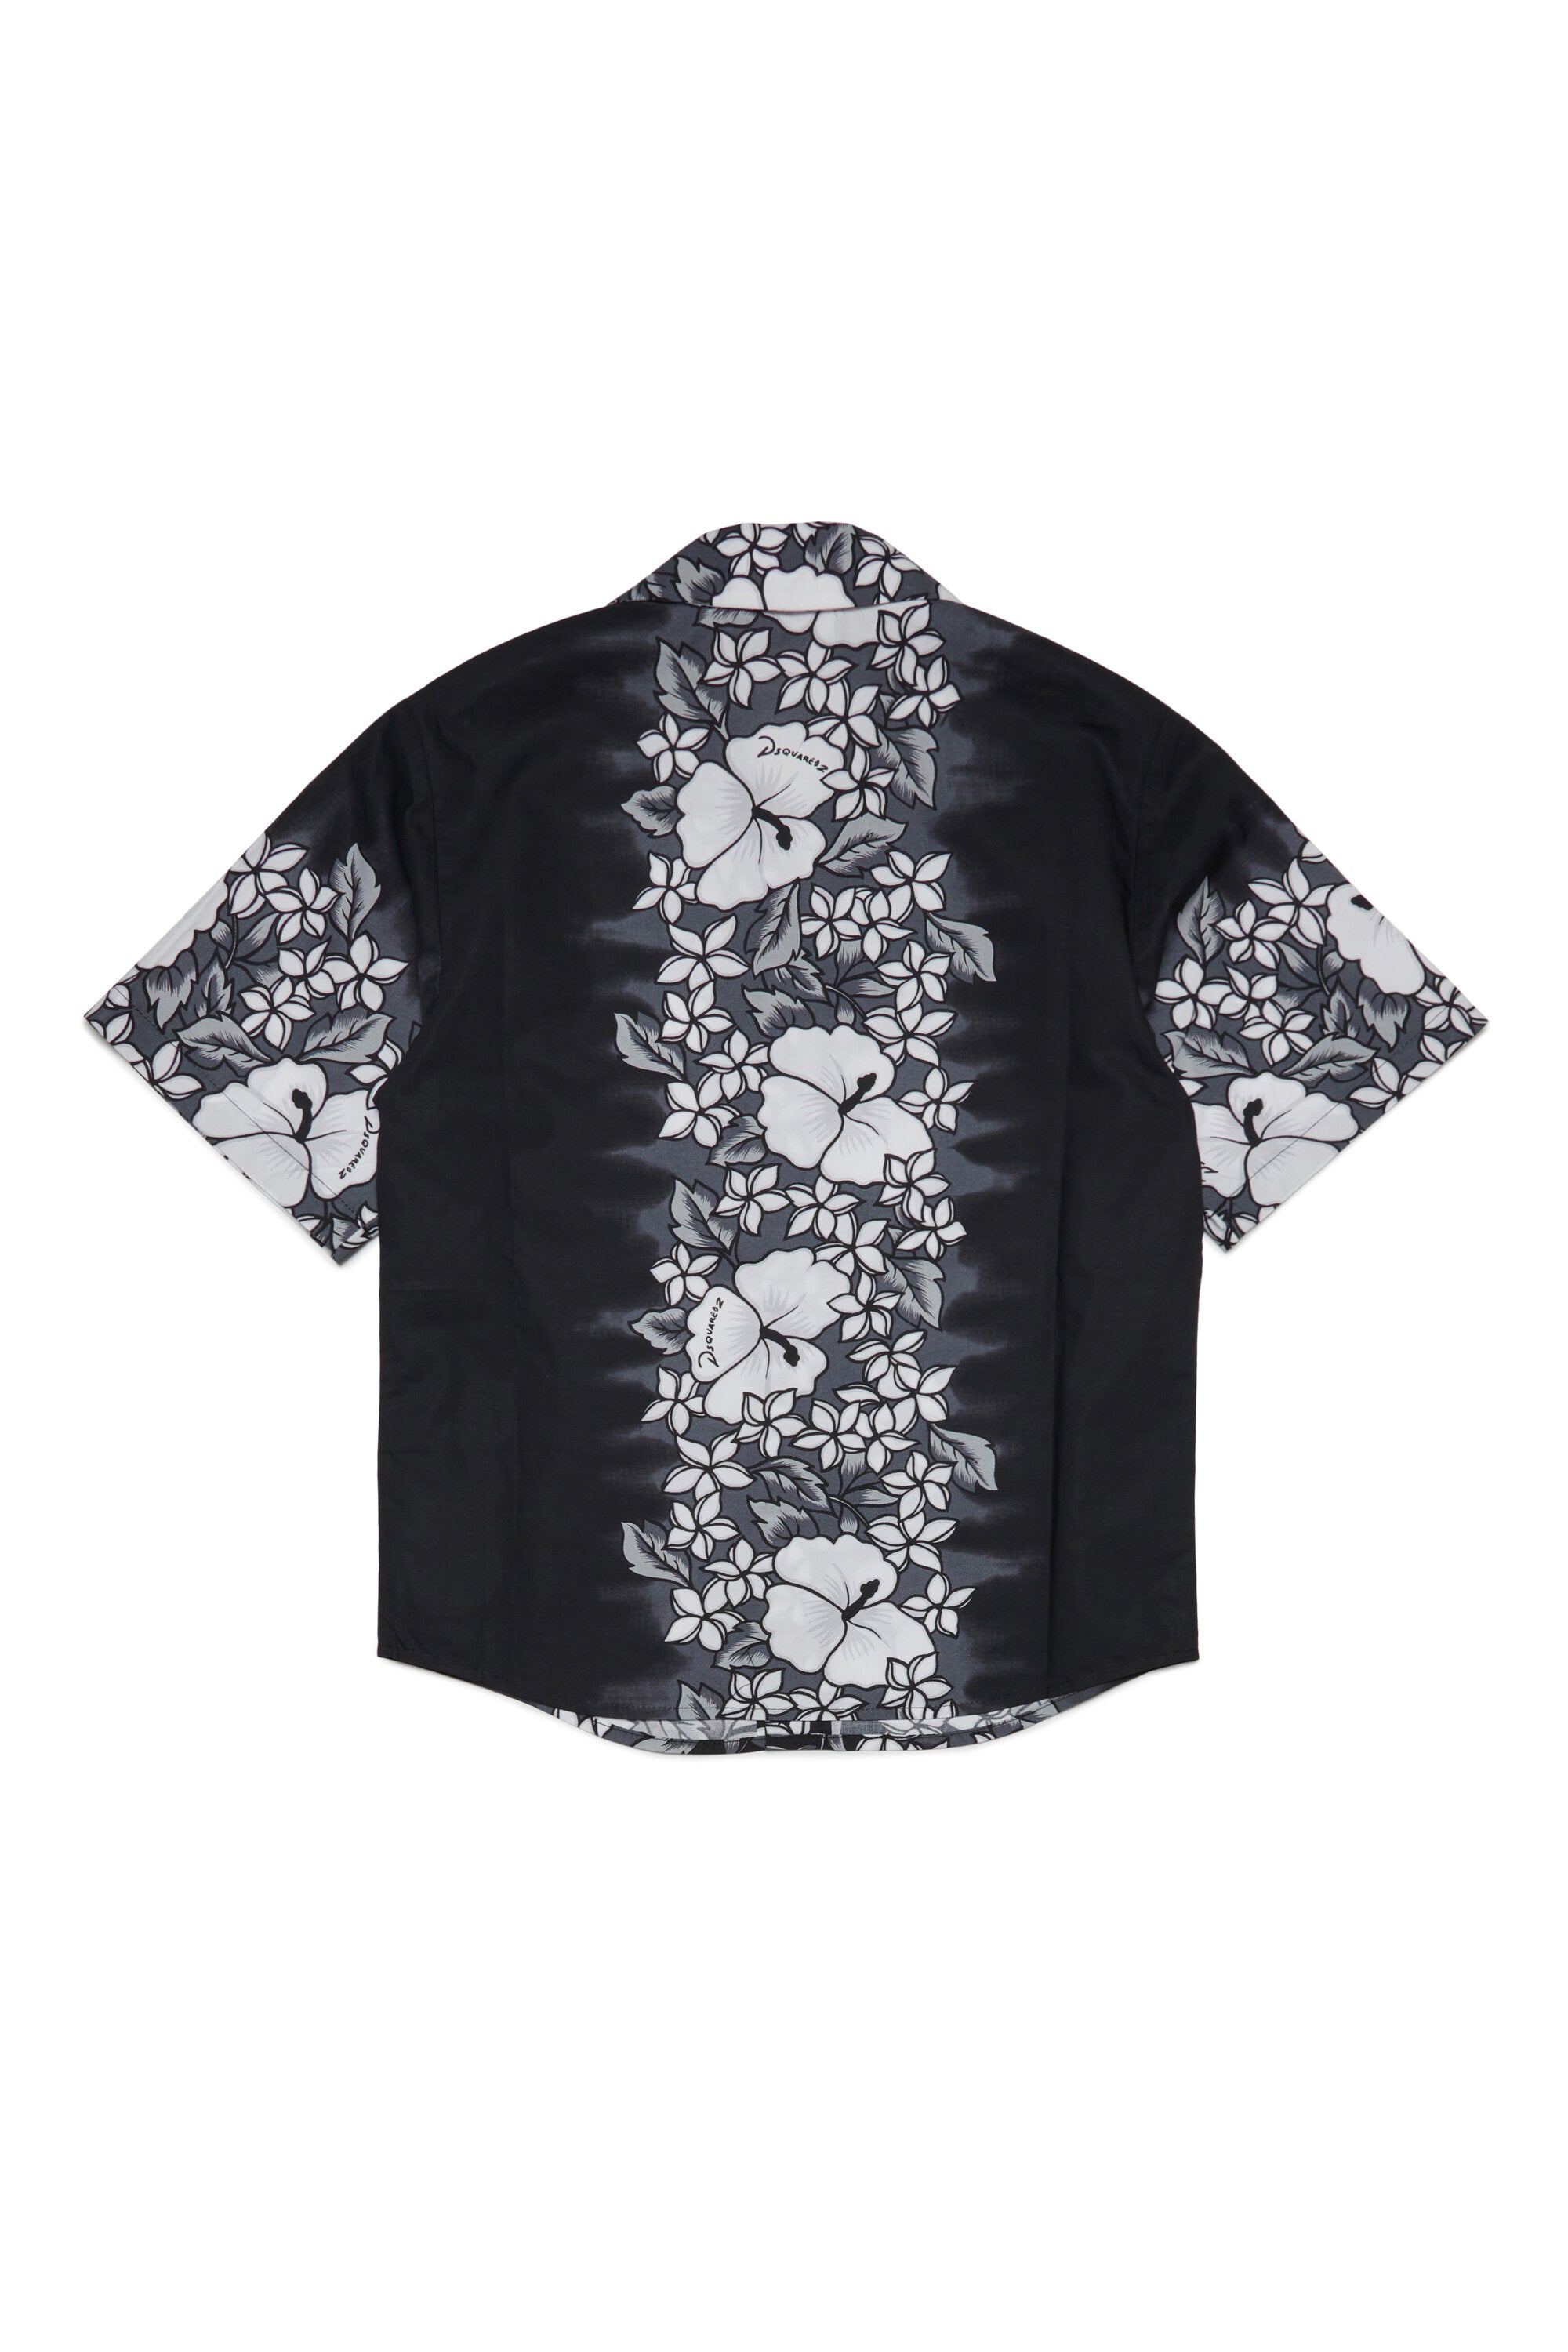 Hawaiian shirt with floral print